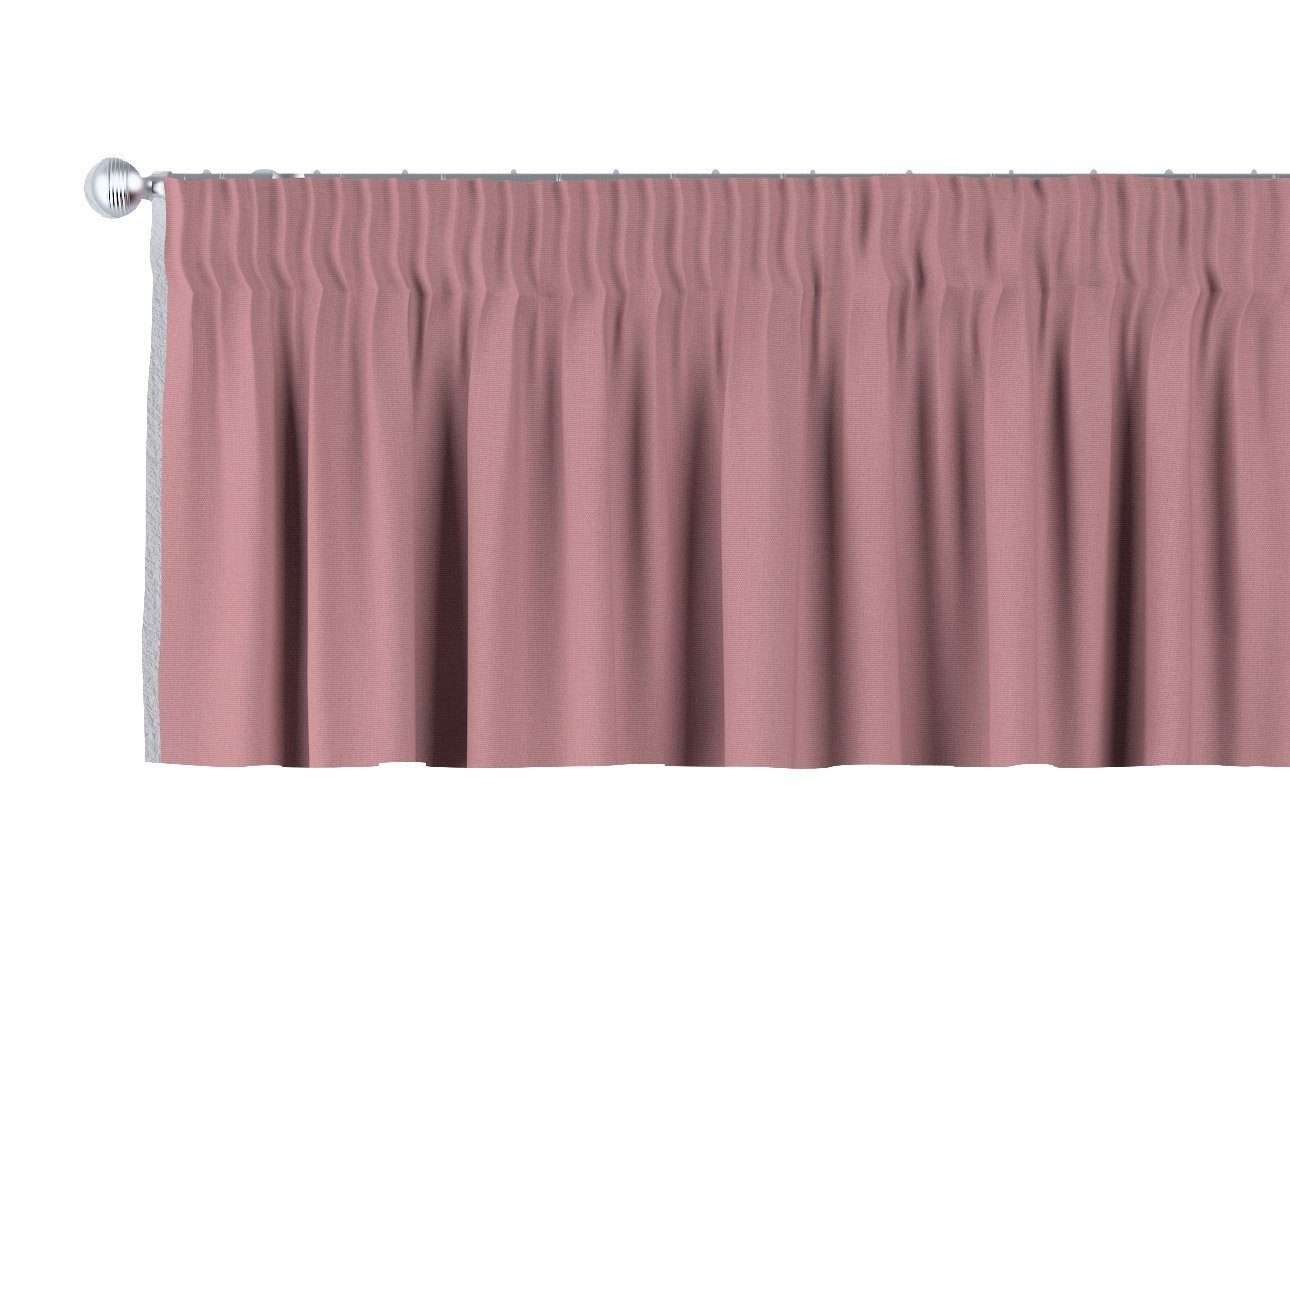 Vorhang mit Kräuselband 130 x 40 cm, Cotton Panama, Dekoria altrosa